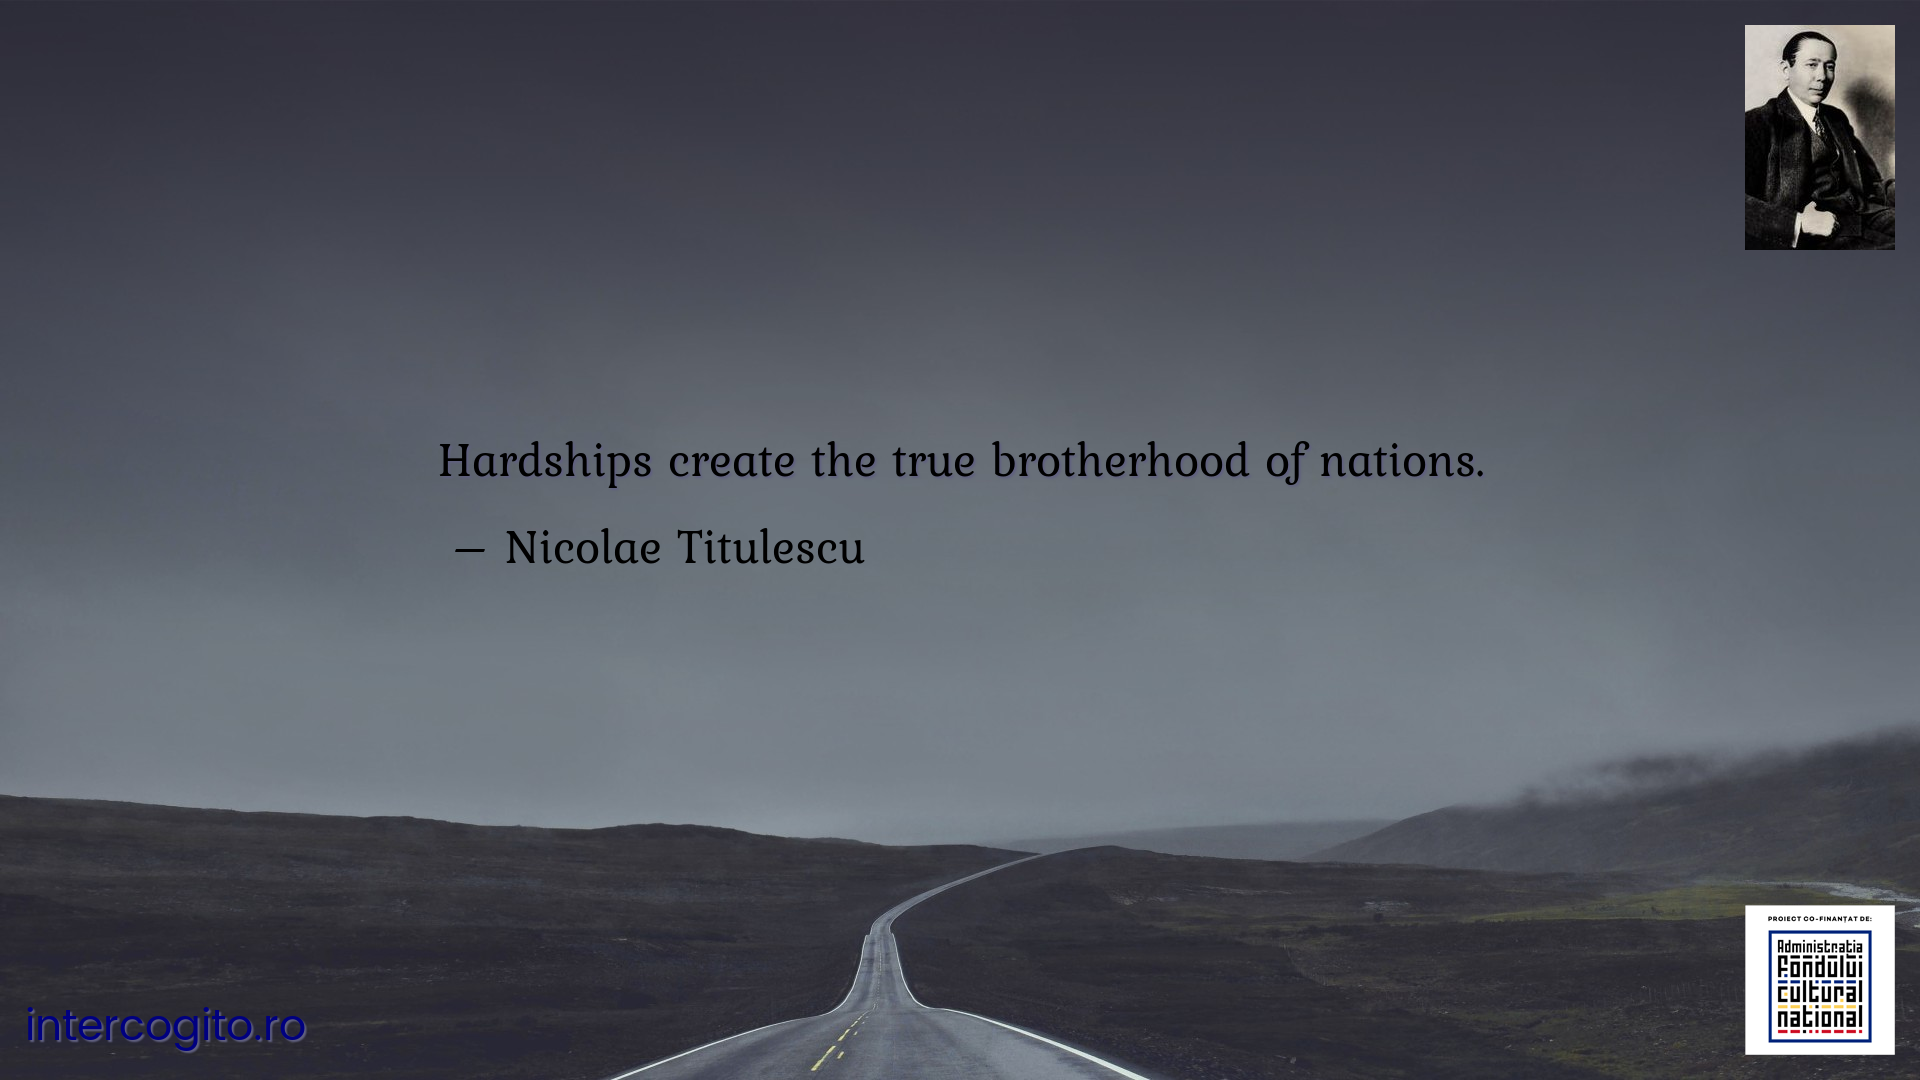 Hardships create the true brotherhood of nations.